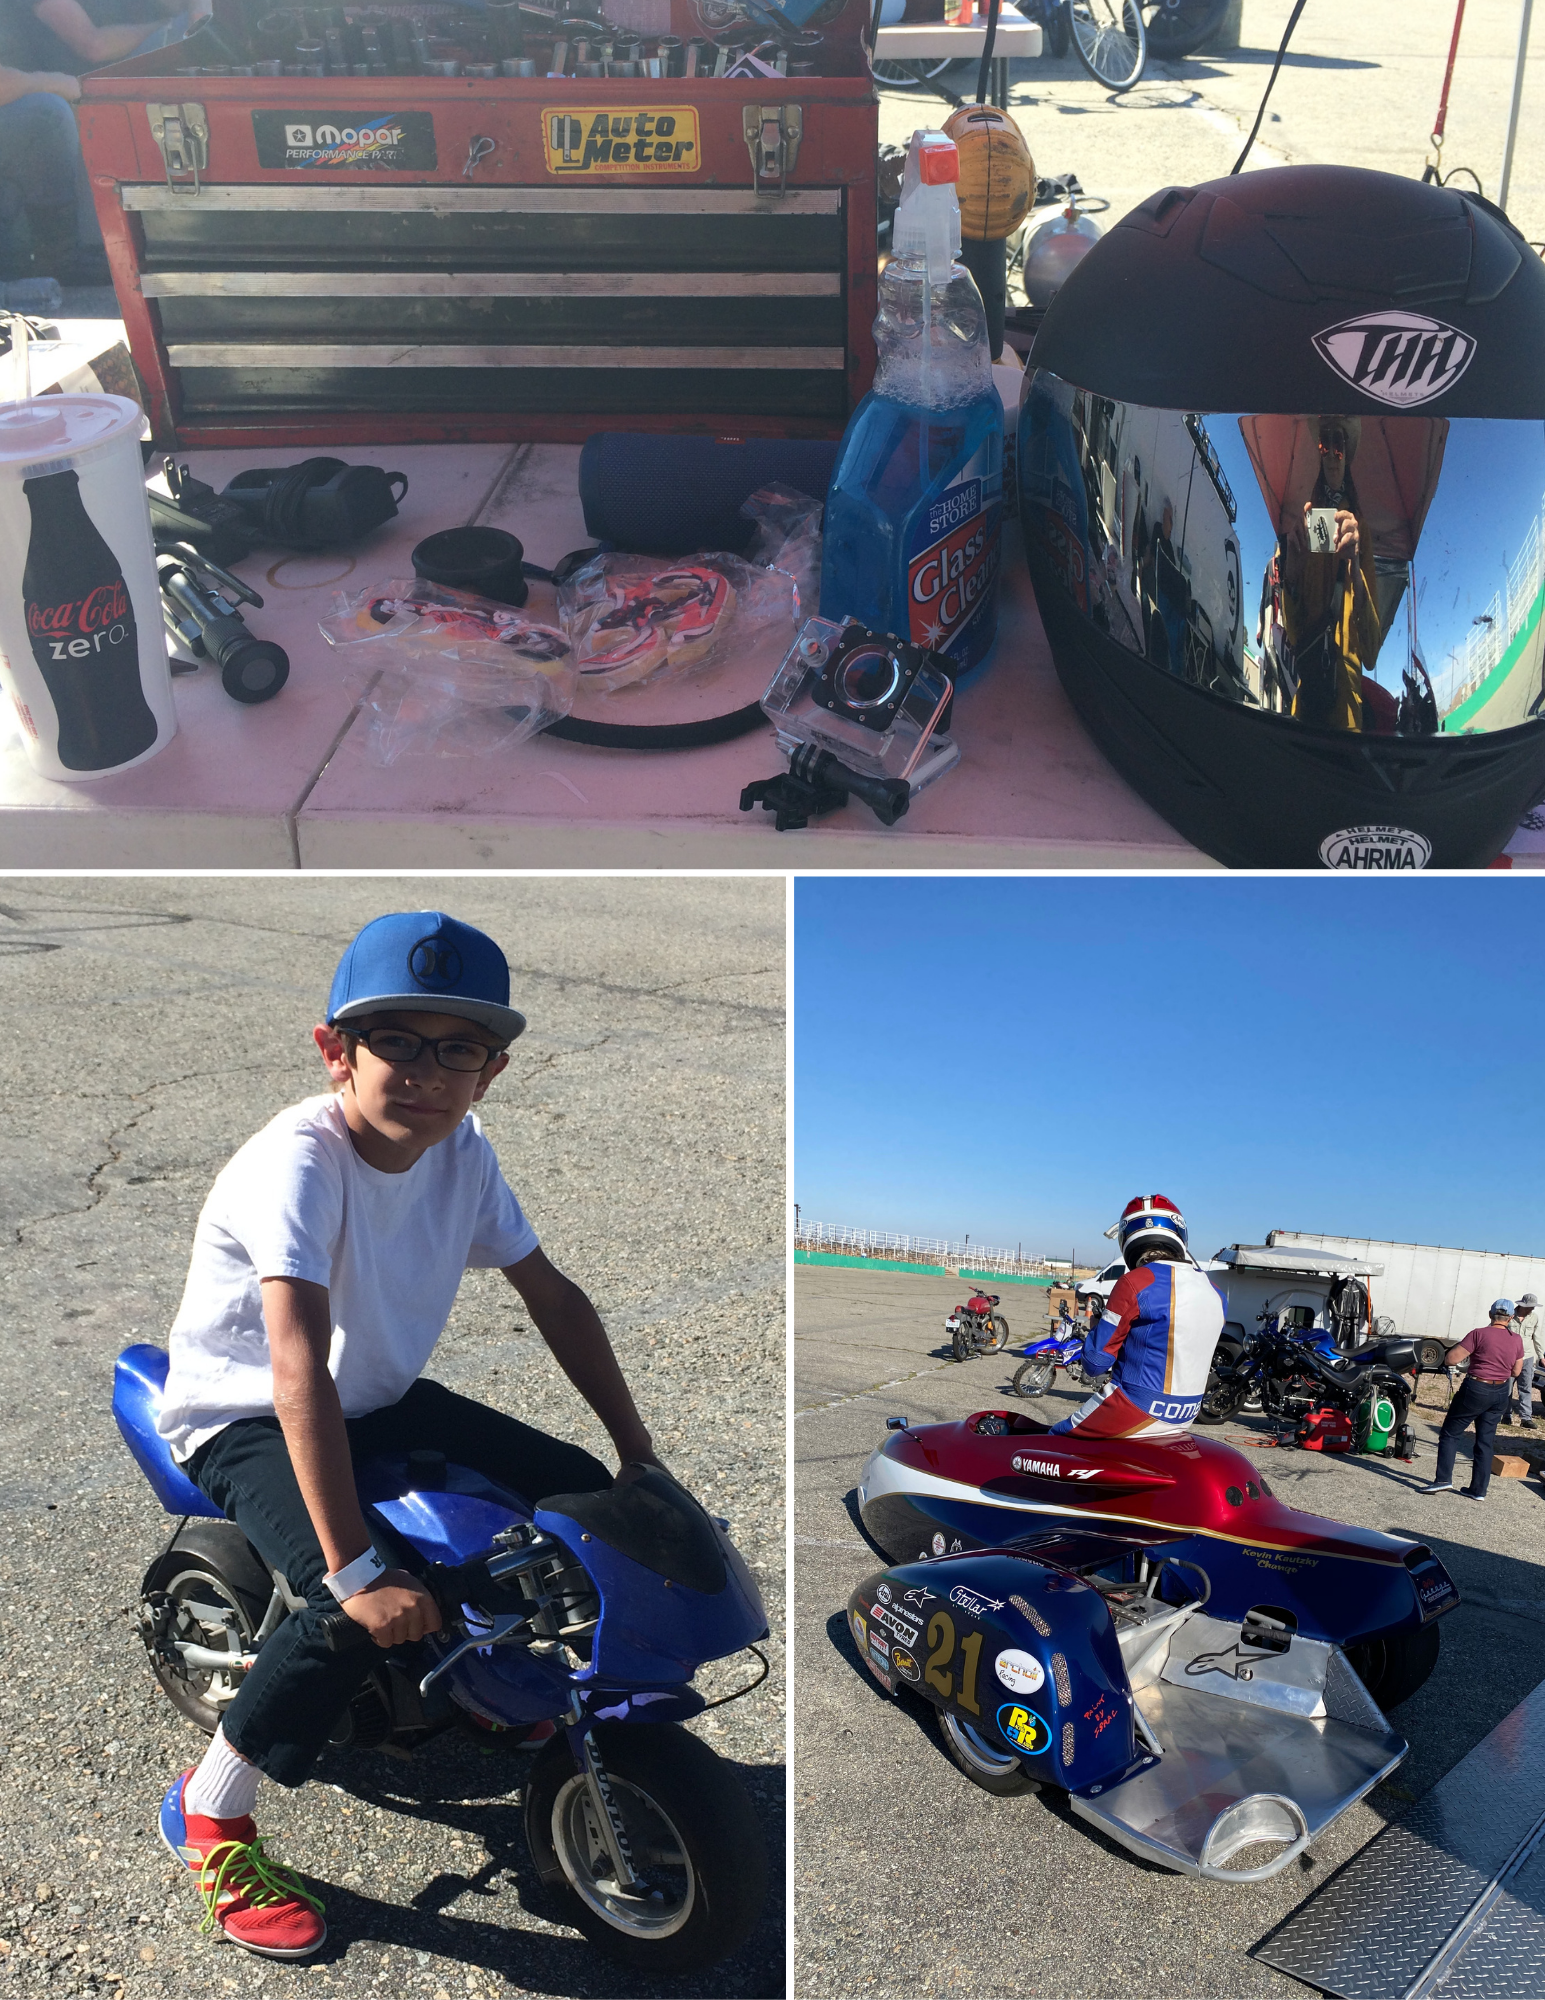 Race track gear and kid riding mini bike